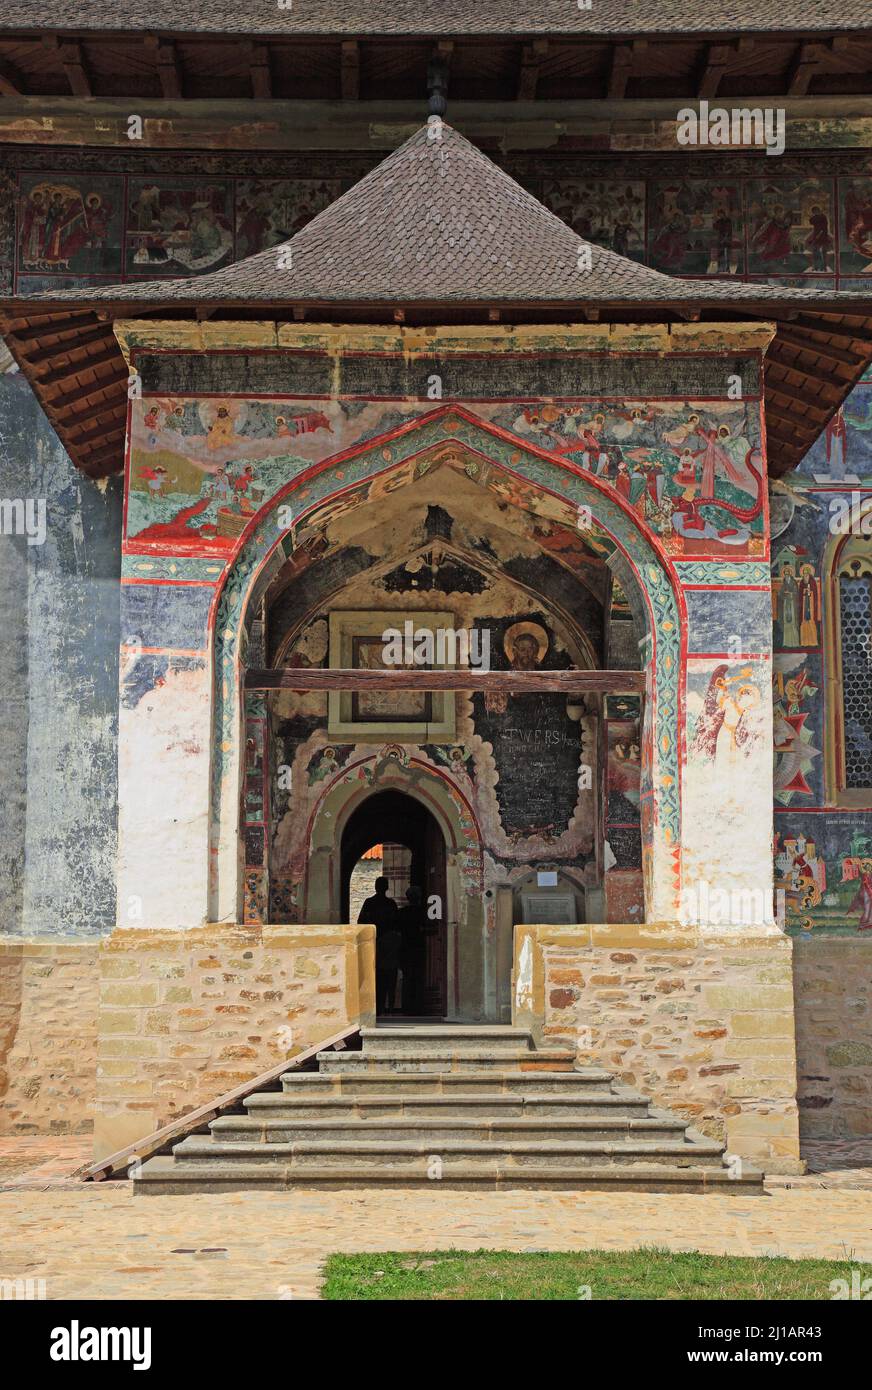 Sucevita, Romania, Das Kloster Sucevita, rumänisch Manastirea Sucevita, liegt in Rumänien im Kreis Suceava auf dem Gebiet der Gemeinde Sucevita. Die i Stock Photo